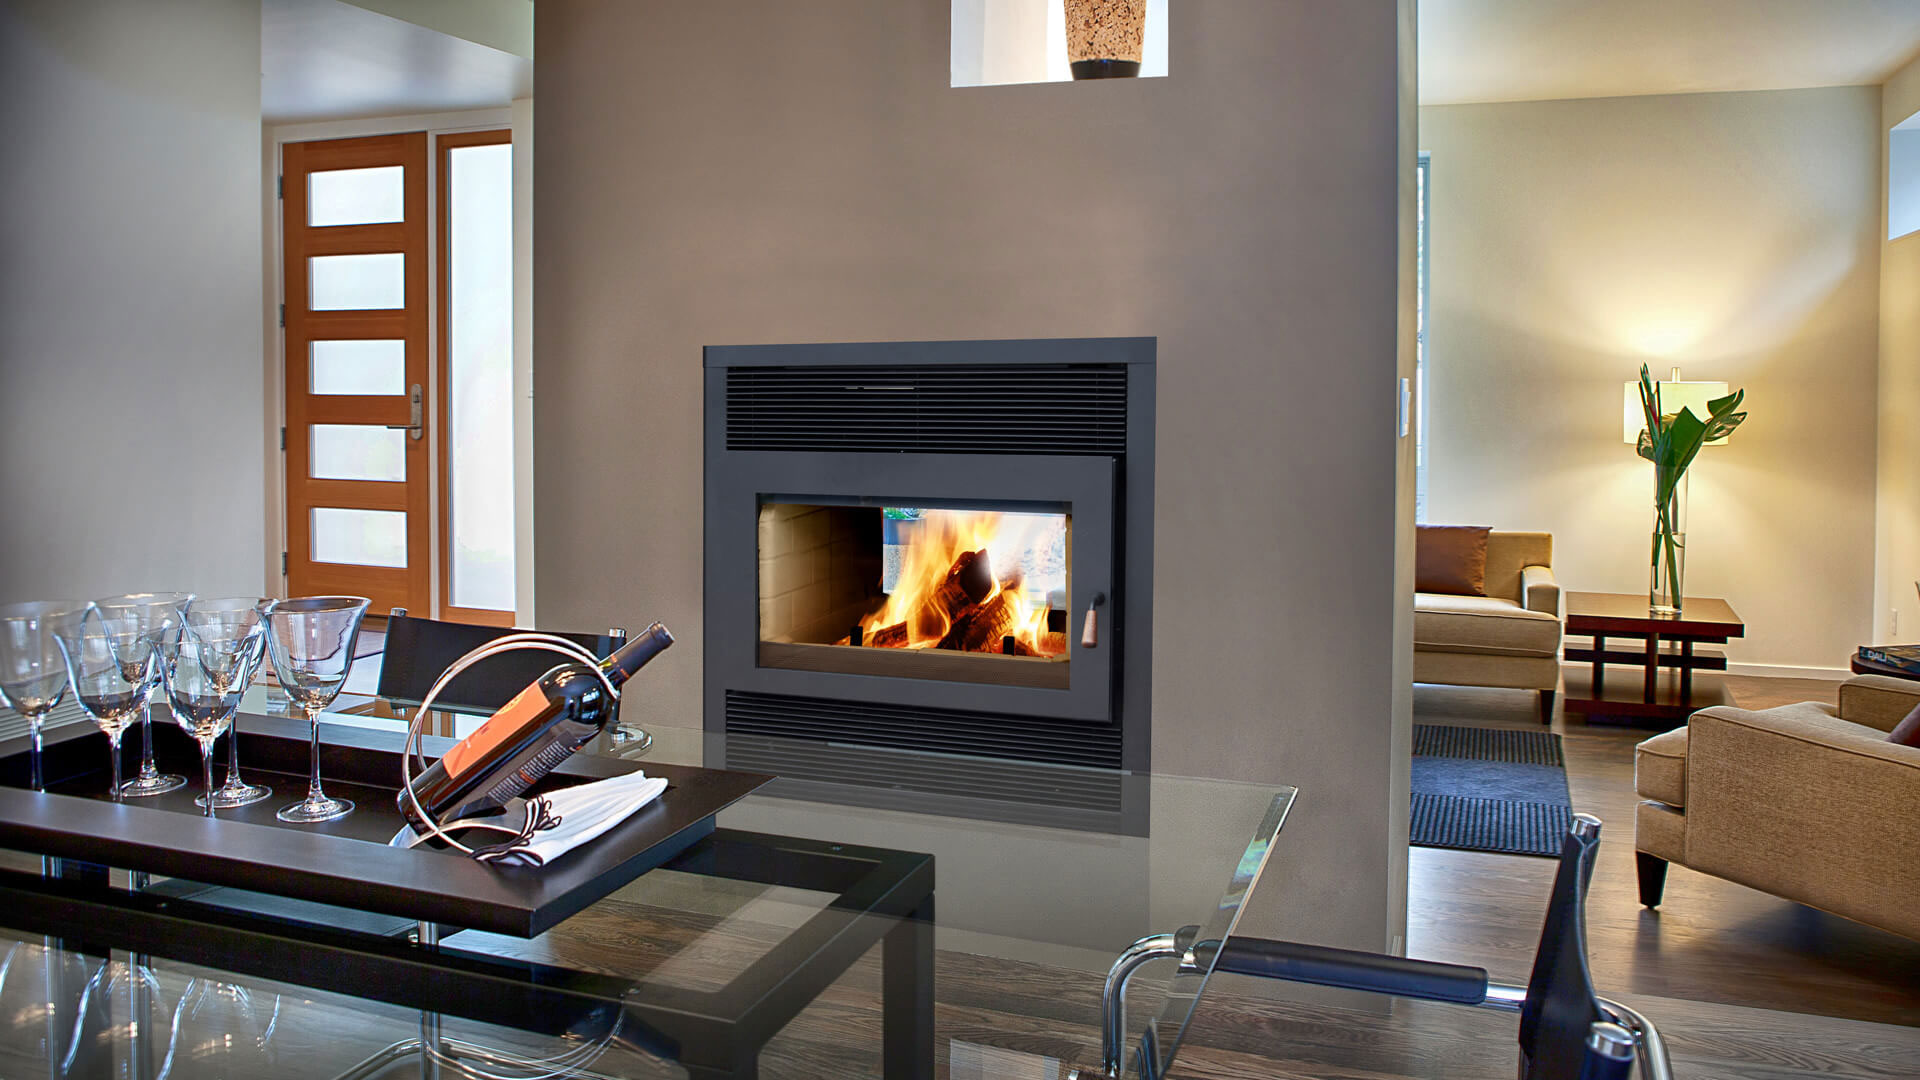 modern Propane fireplace 